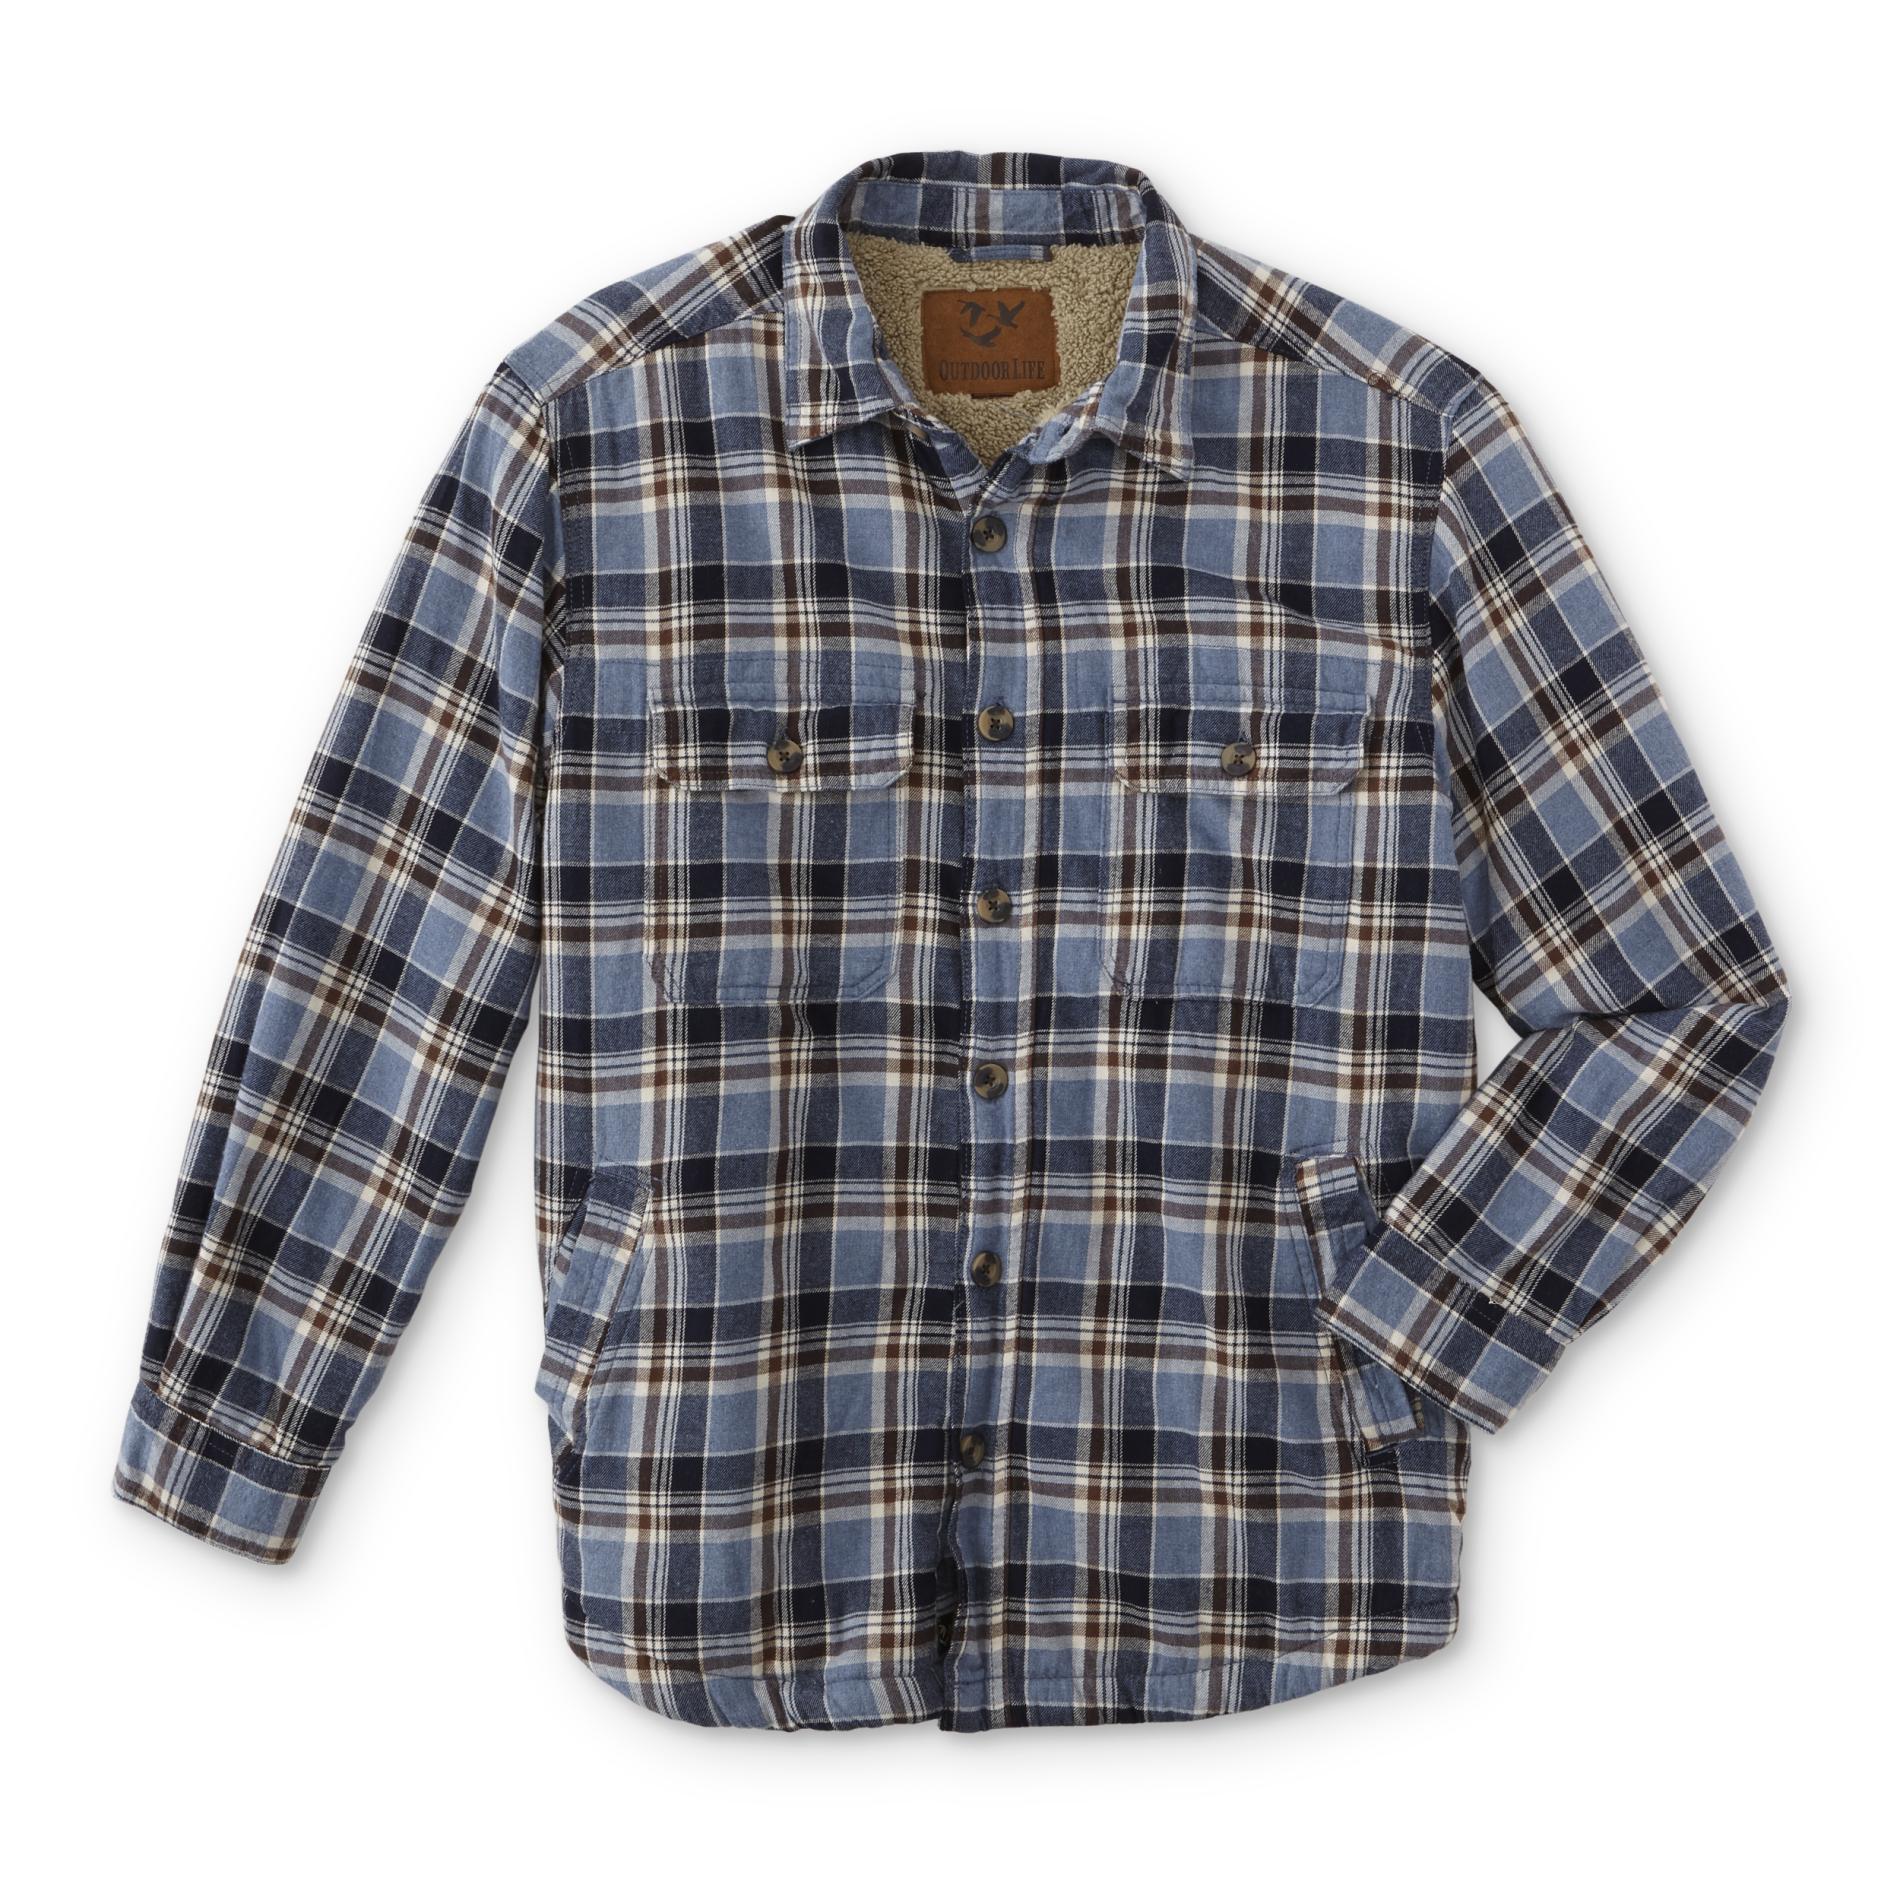 Outdoor Life Men's Flannel Shirt Jacket-Plaid